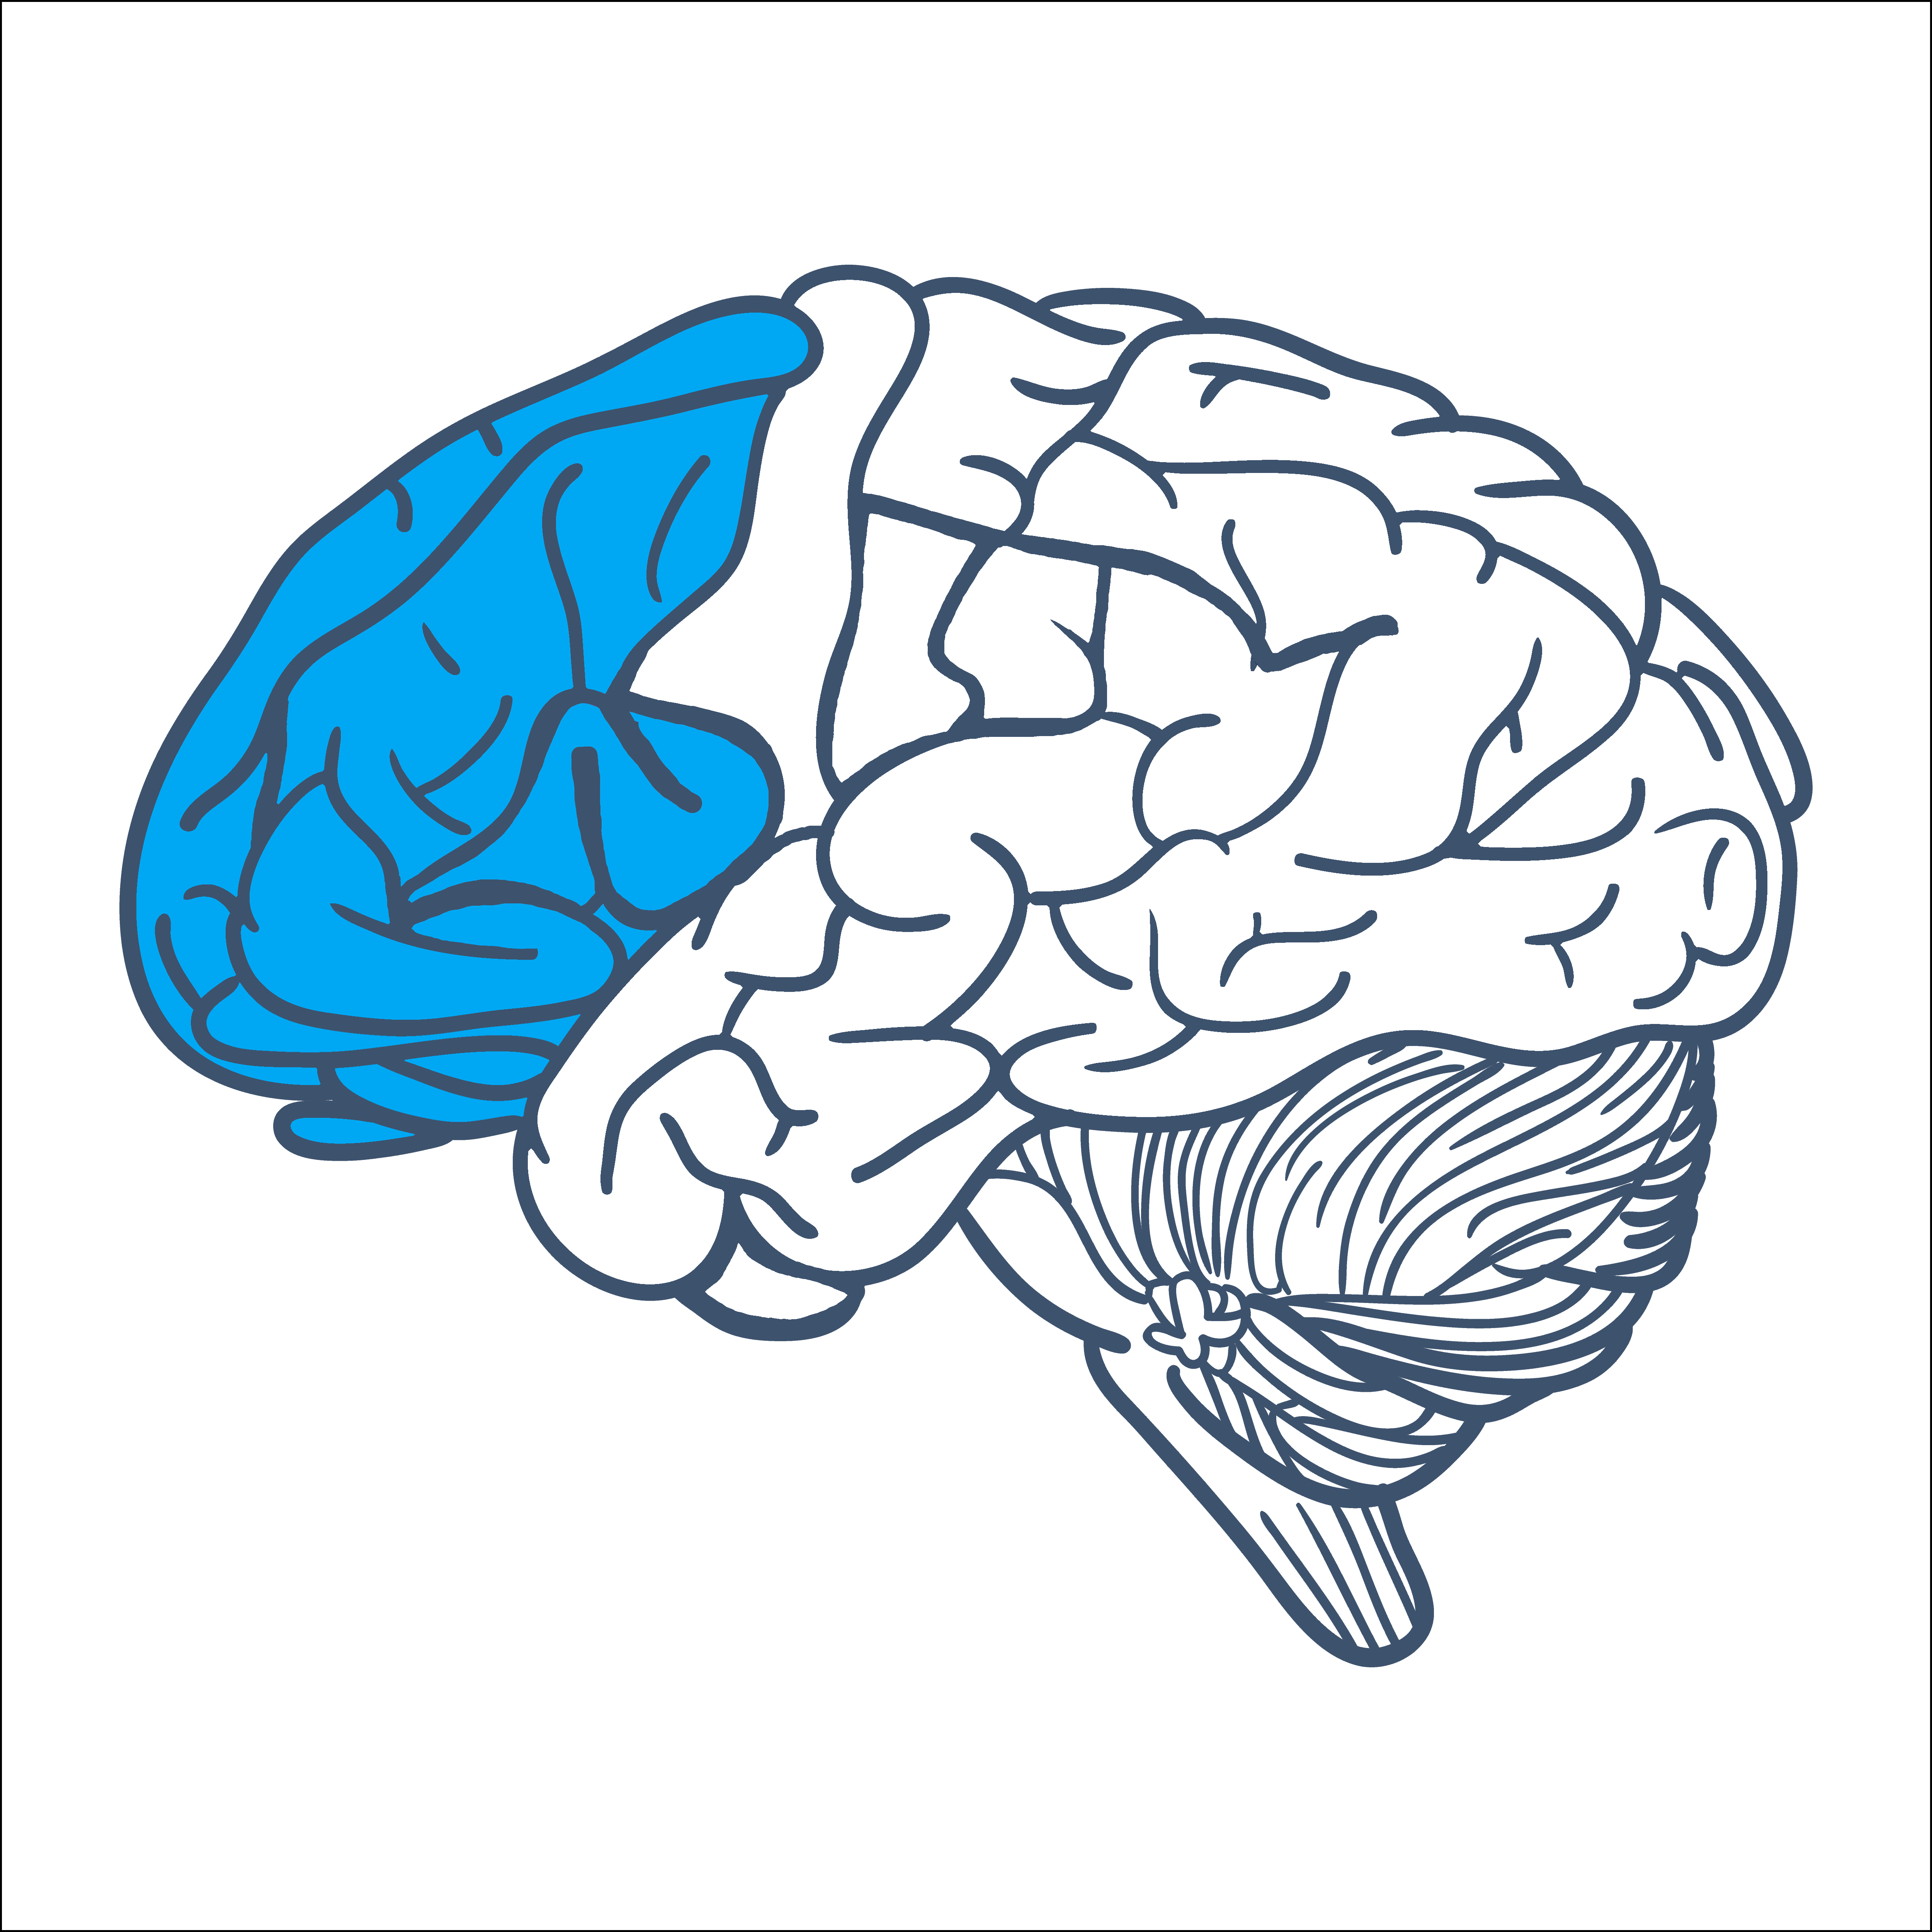 blue part of brain that identifies the strategic network